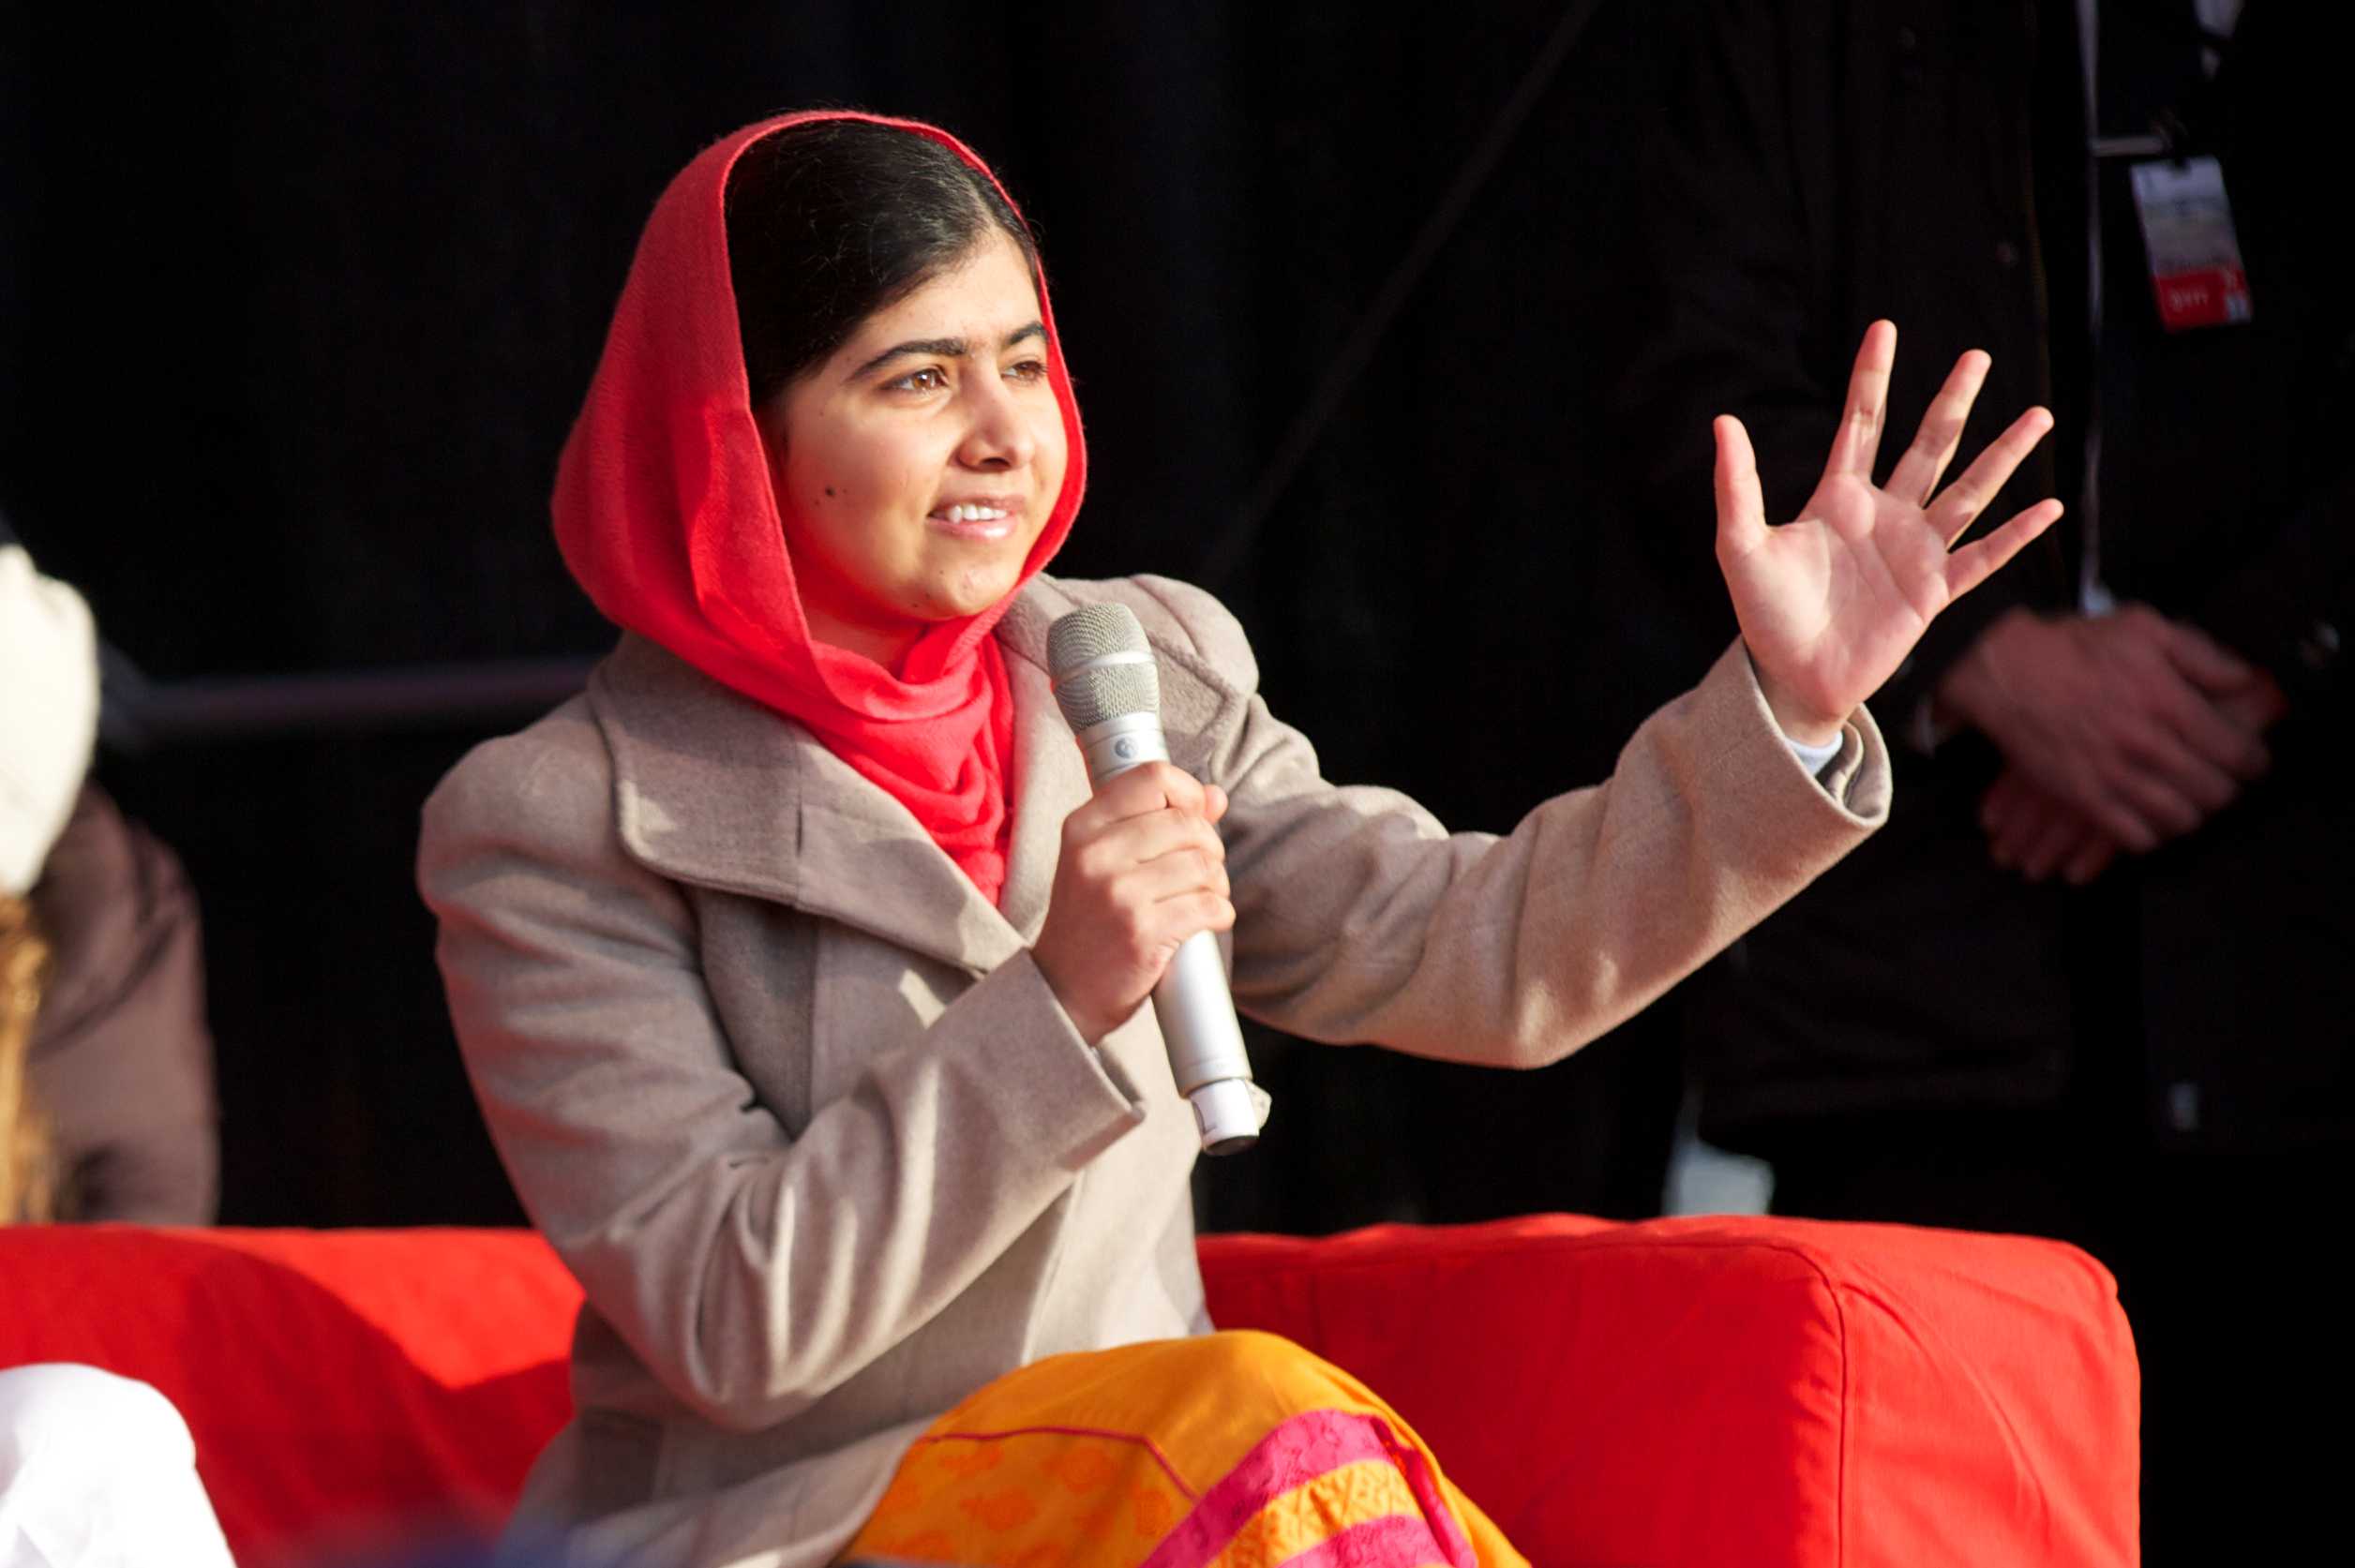 Malala Yousafzai attends her first class at Oxford University